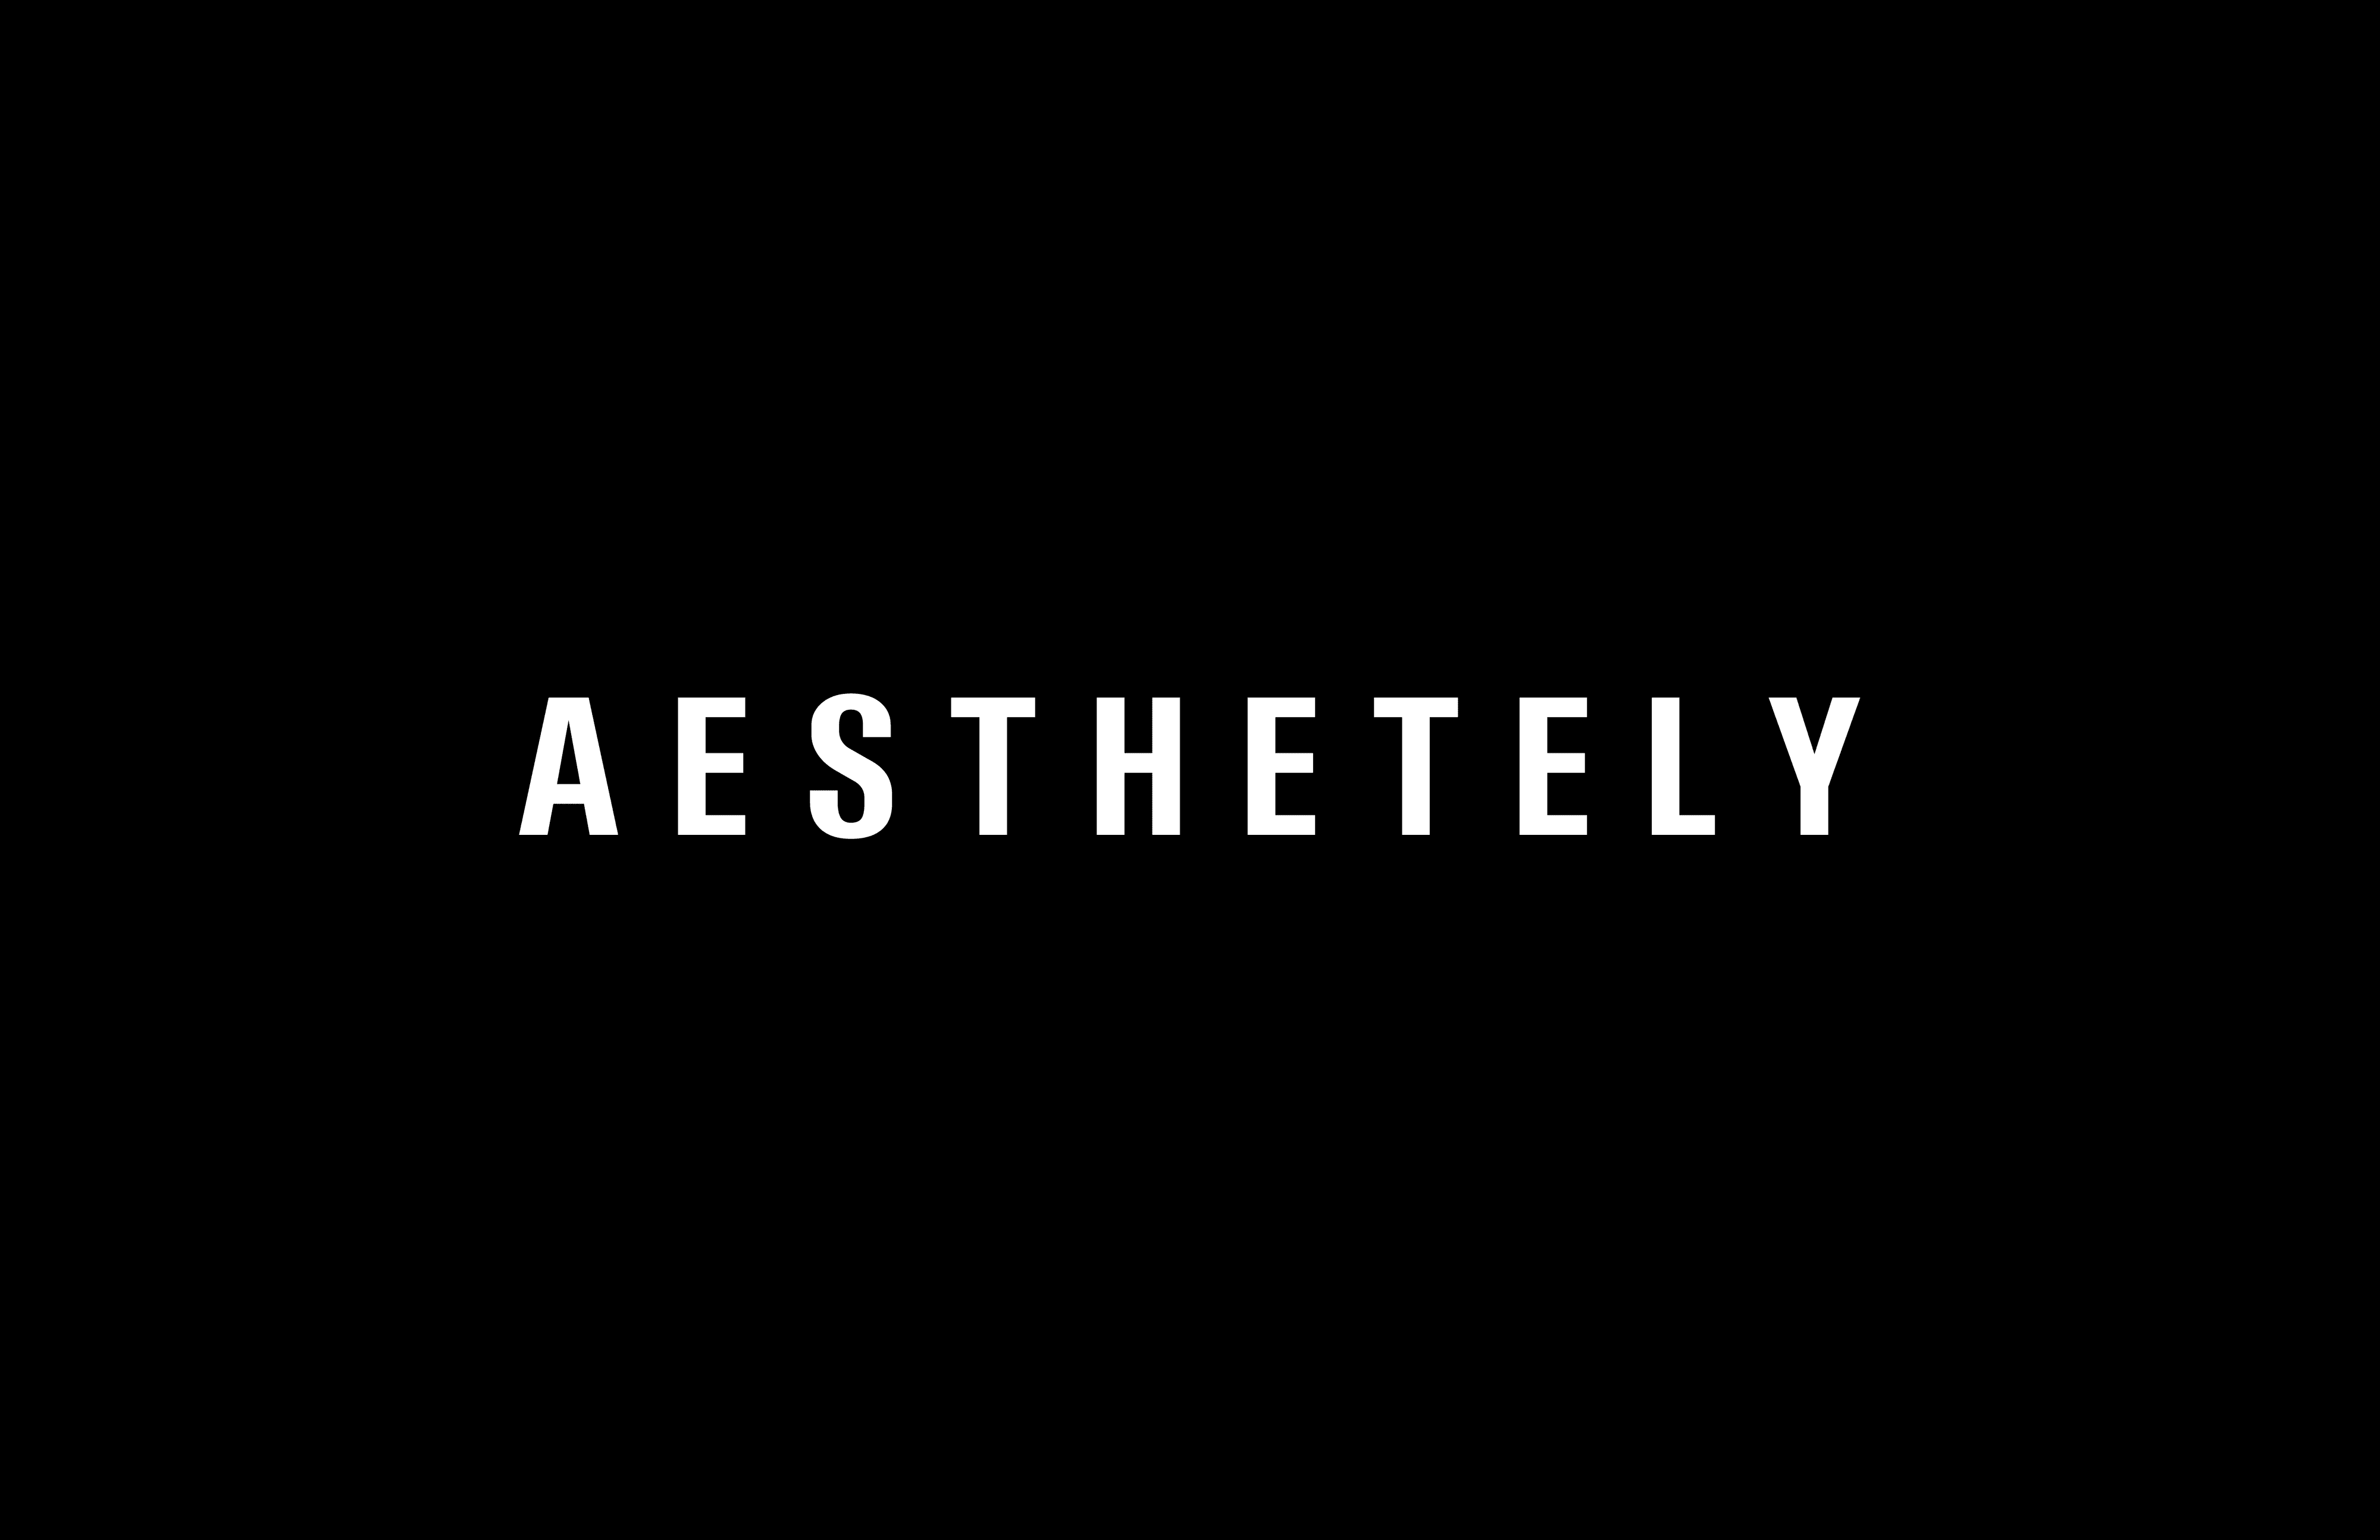 AESTHETELY